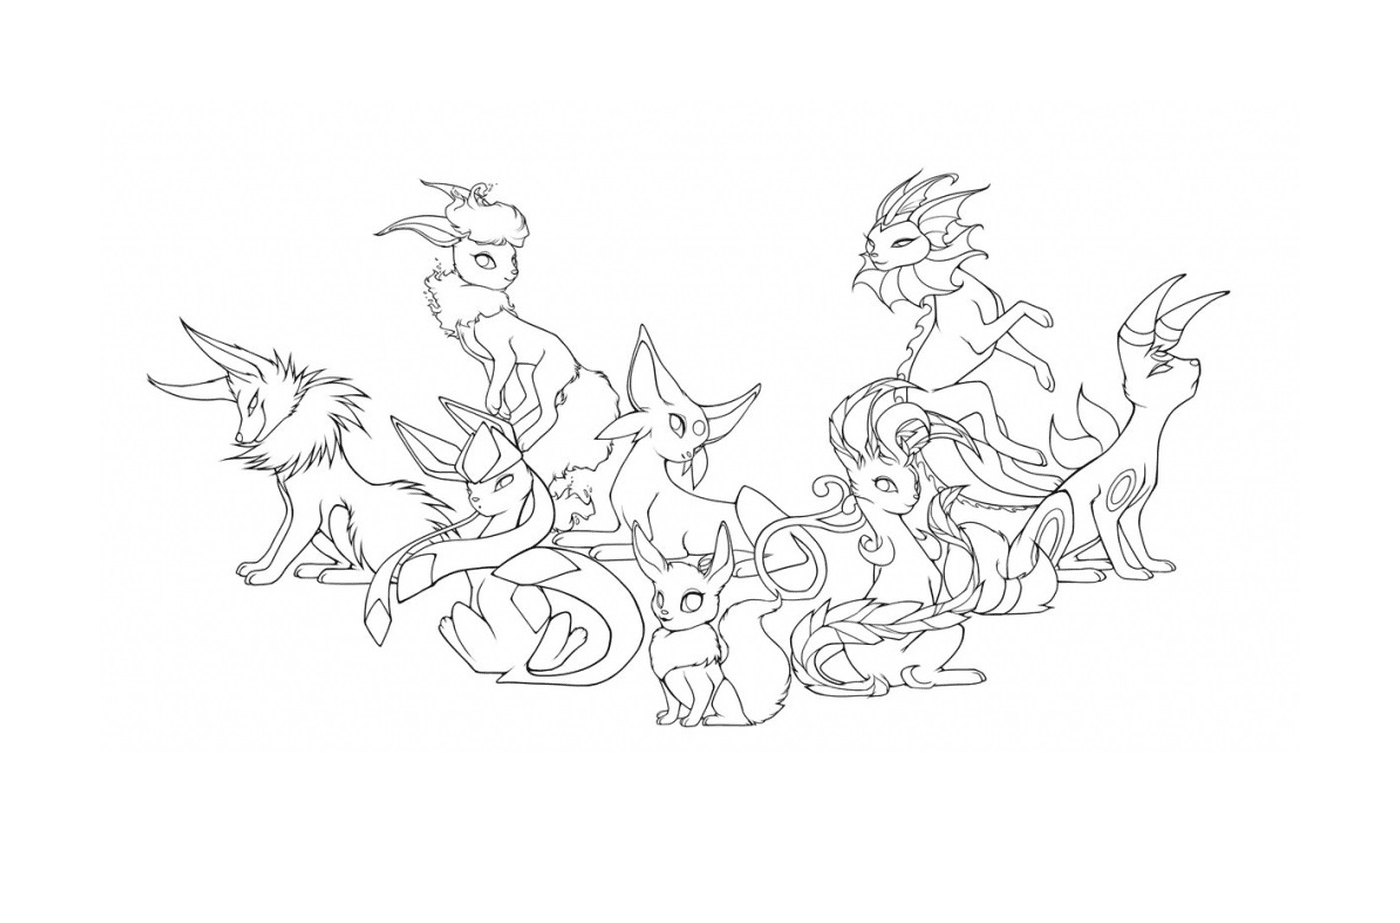   Pokémon Évoli Méga-Évolutions, diversité animale en groupe 